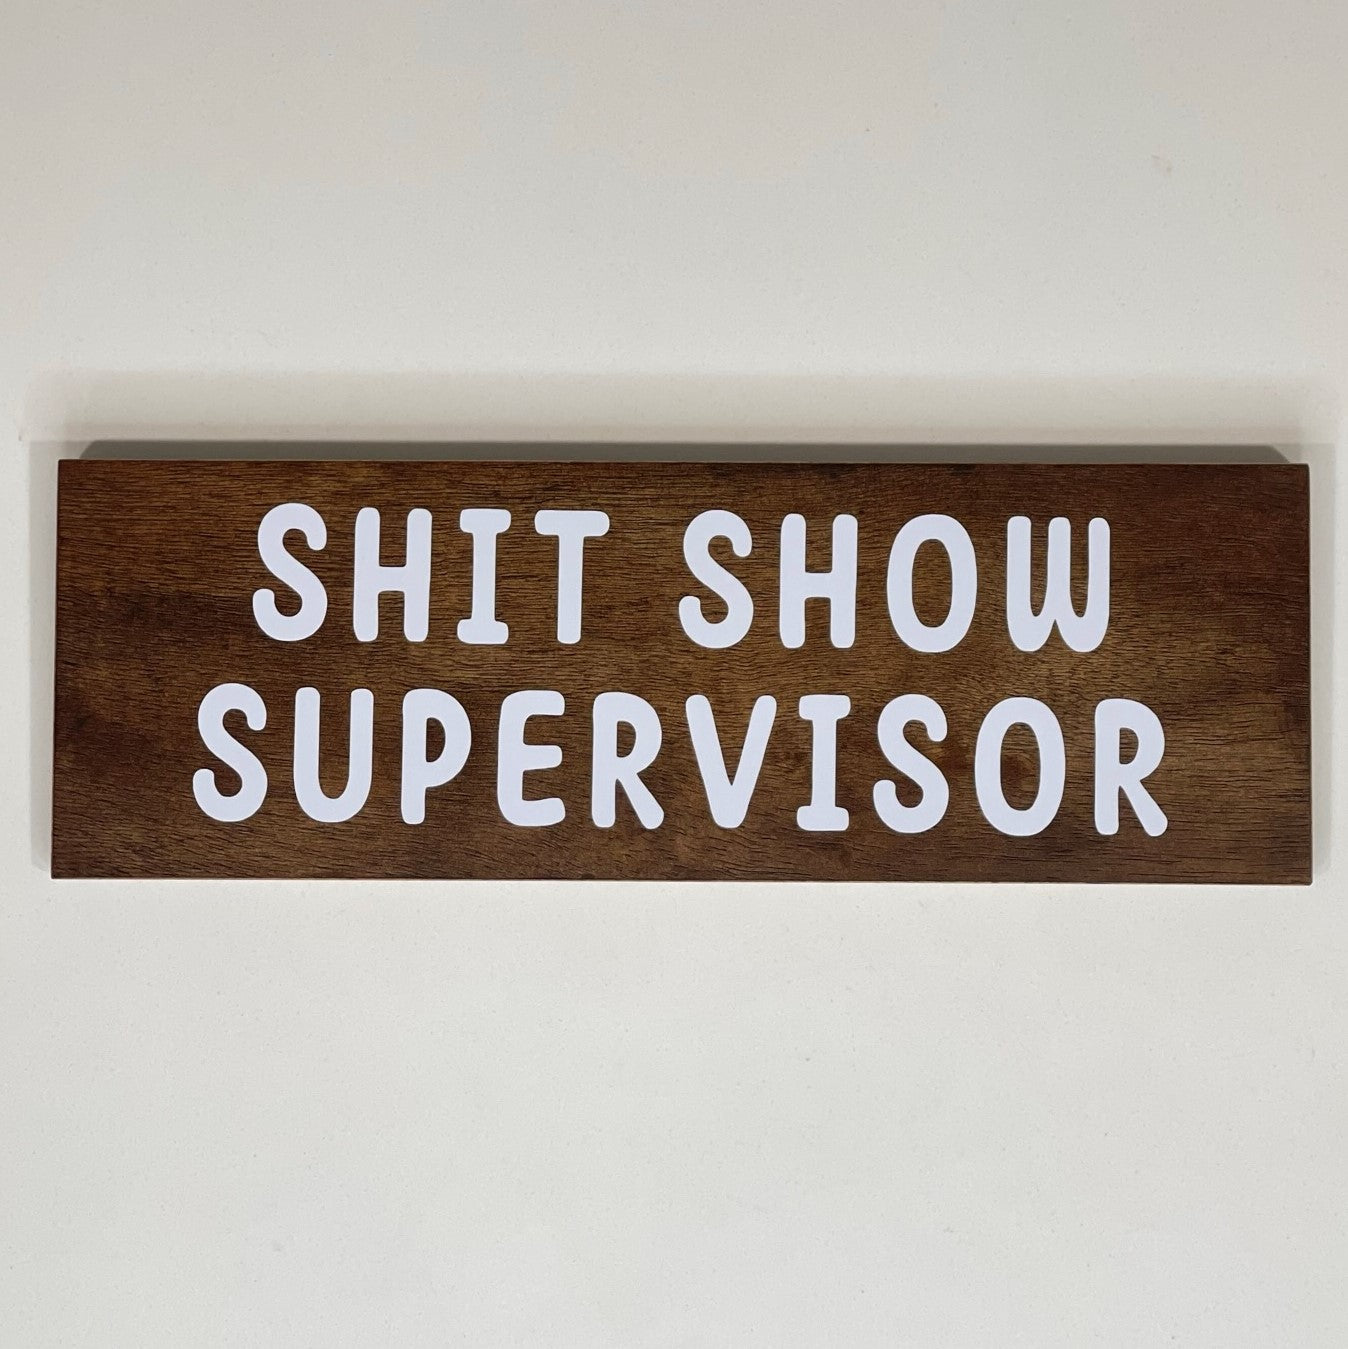 Shit Show Supervisor - Funny Sign - Wall Decor - Bar Wall Art - Wooden Sign